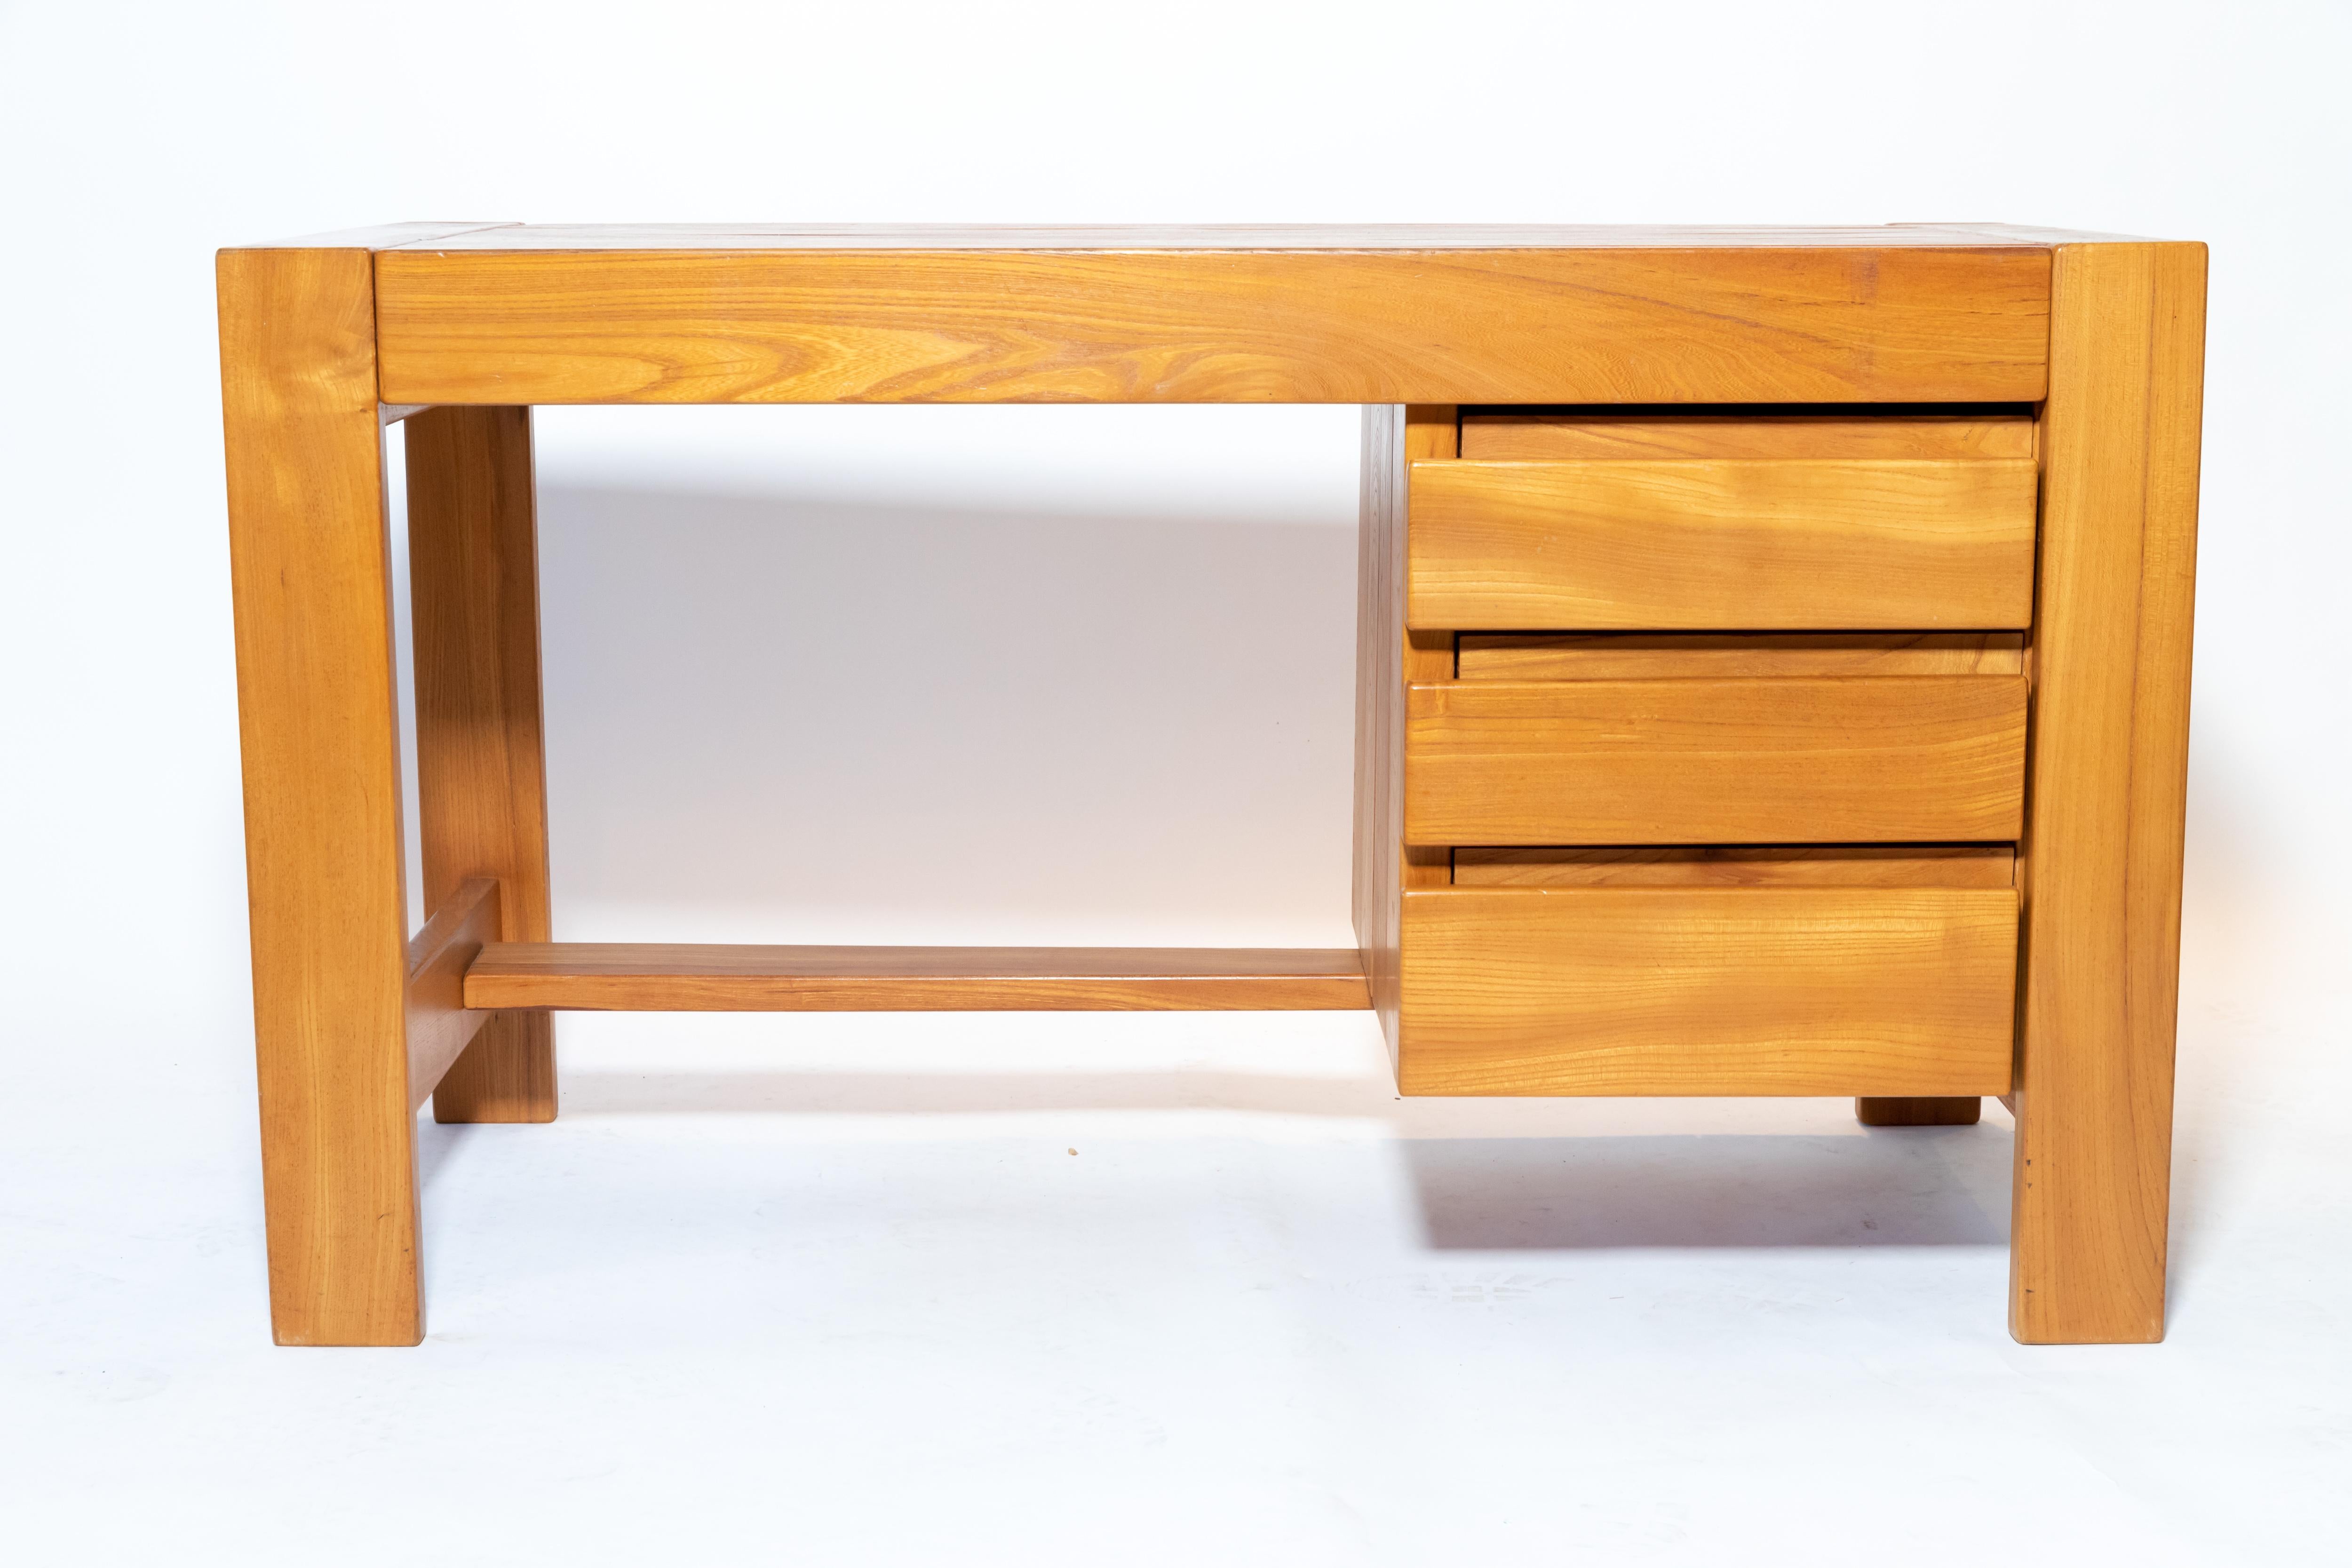 Wood desk designed by Pierre Chapo, France, circa 1970s.